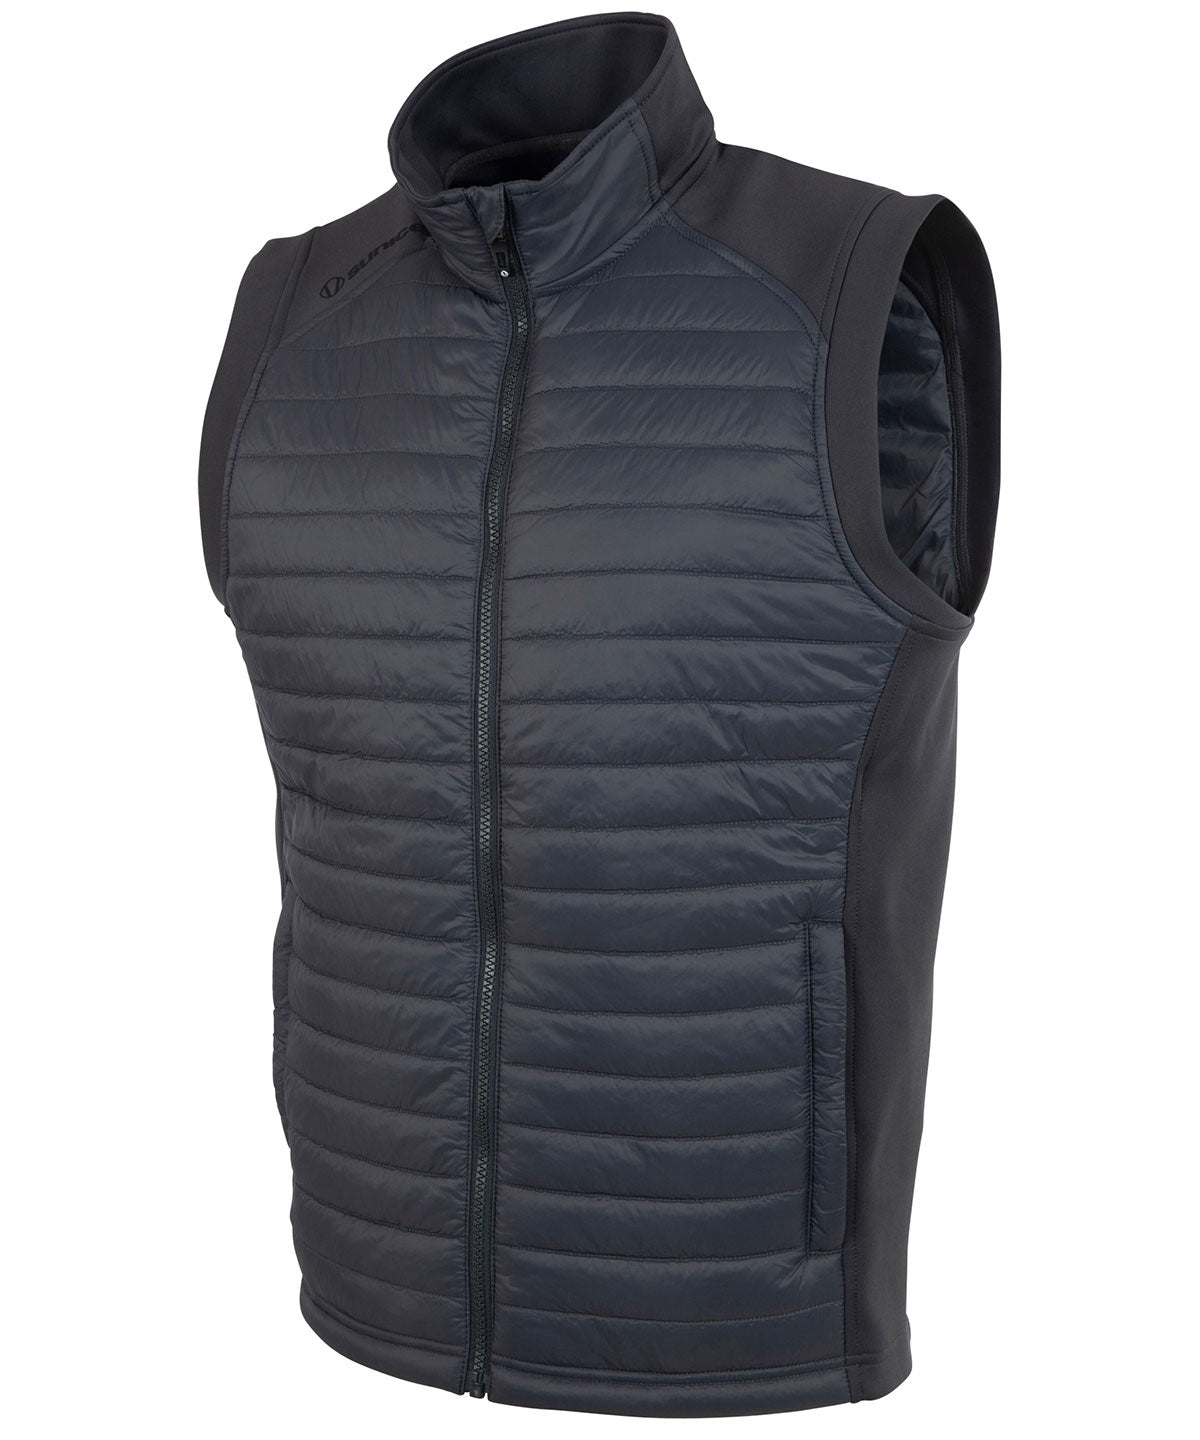 Selecto Light GRey Full Sleeves Thermal Vest, JG-Kids Upper Thermal